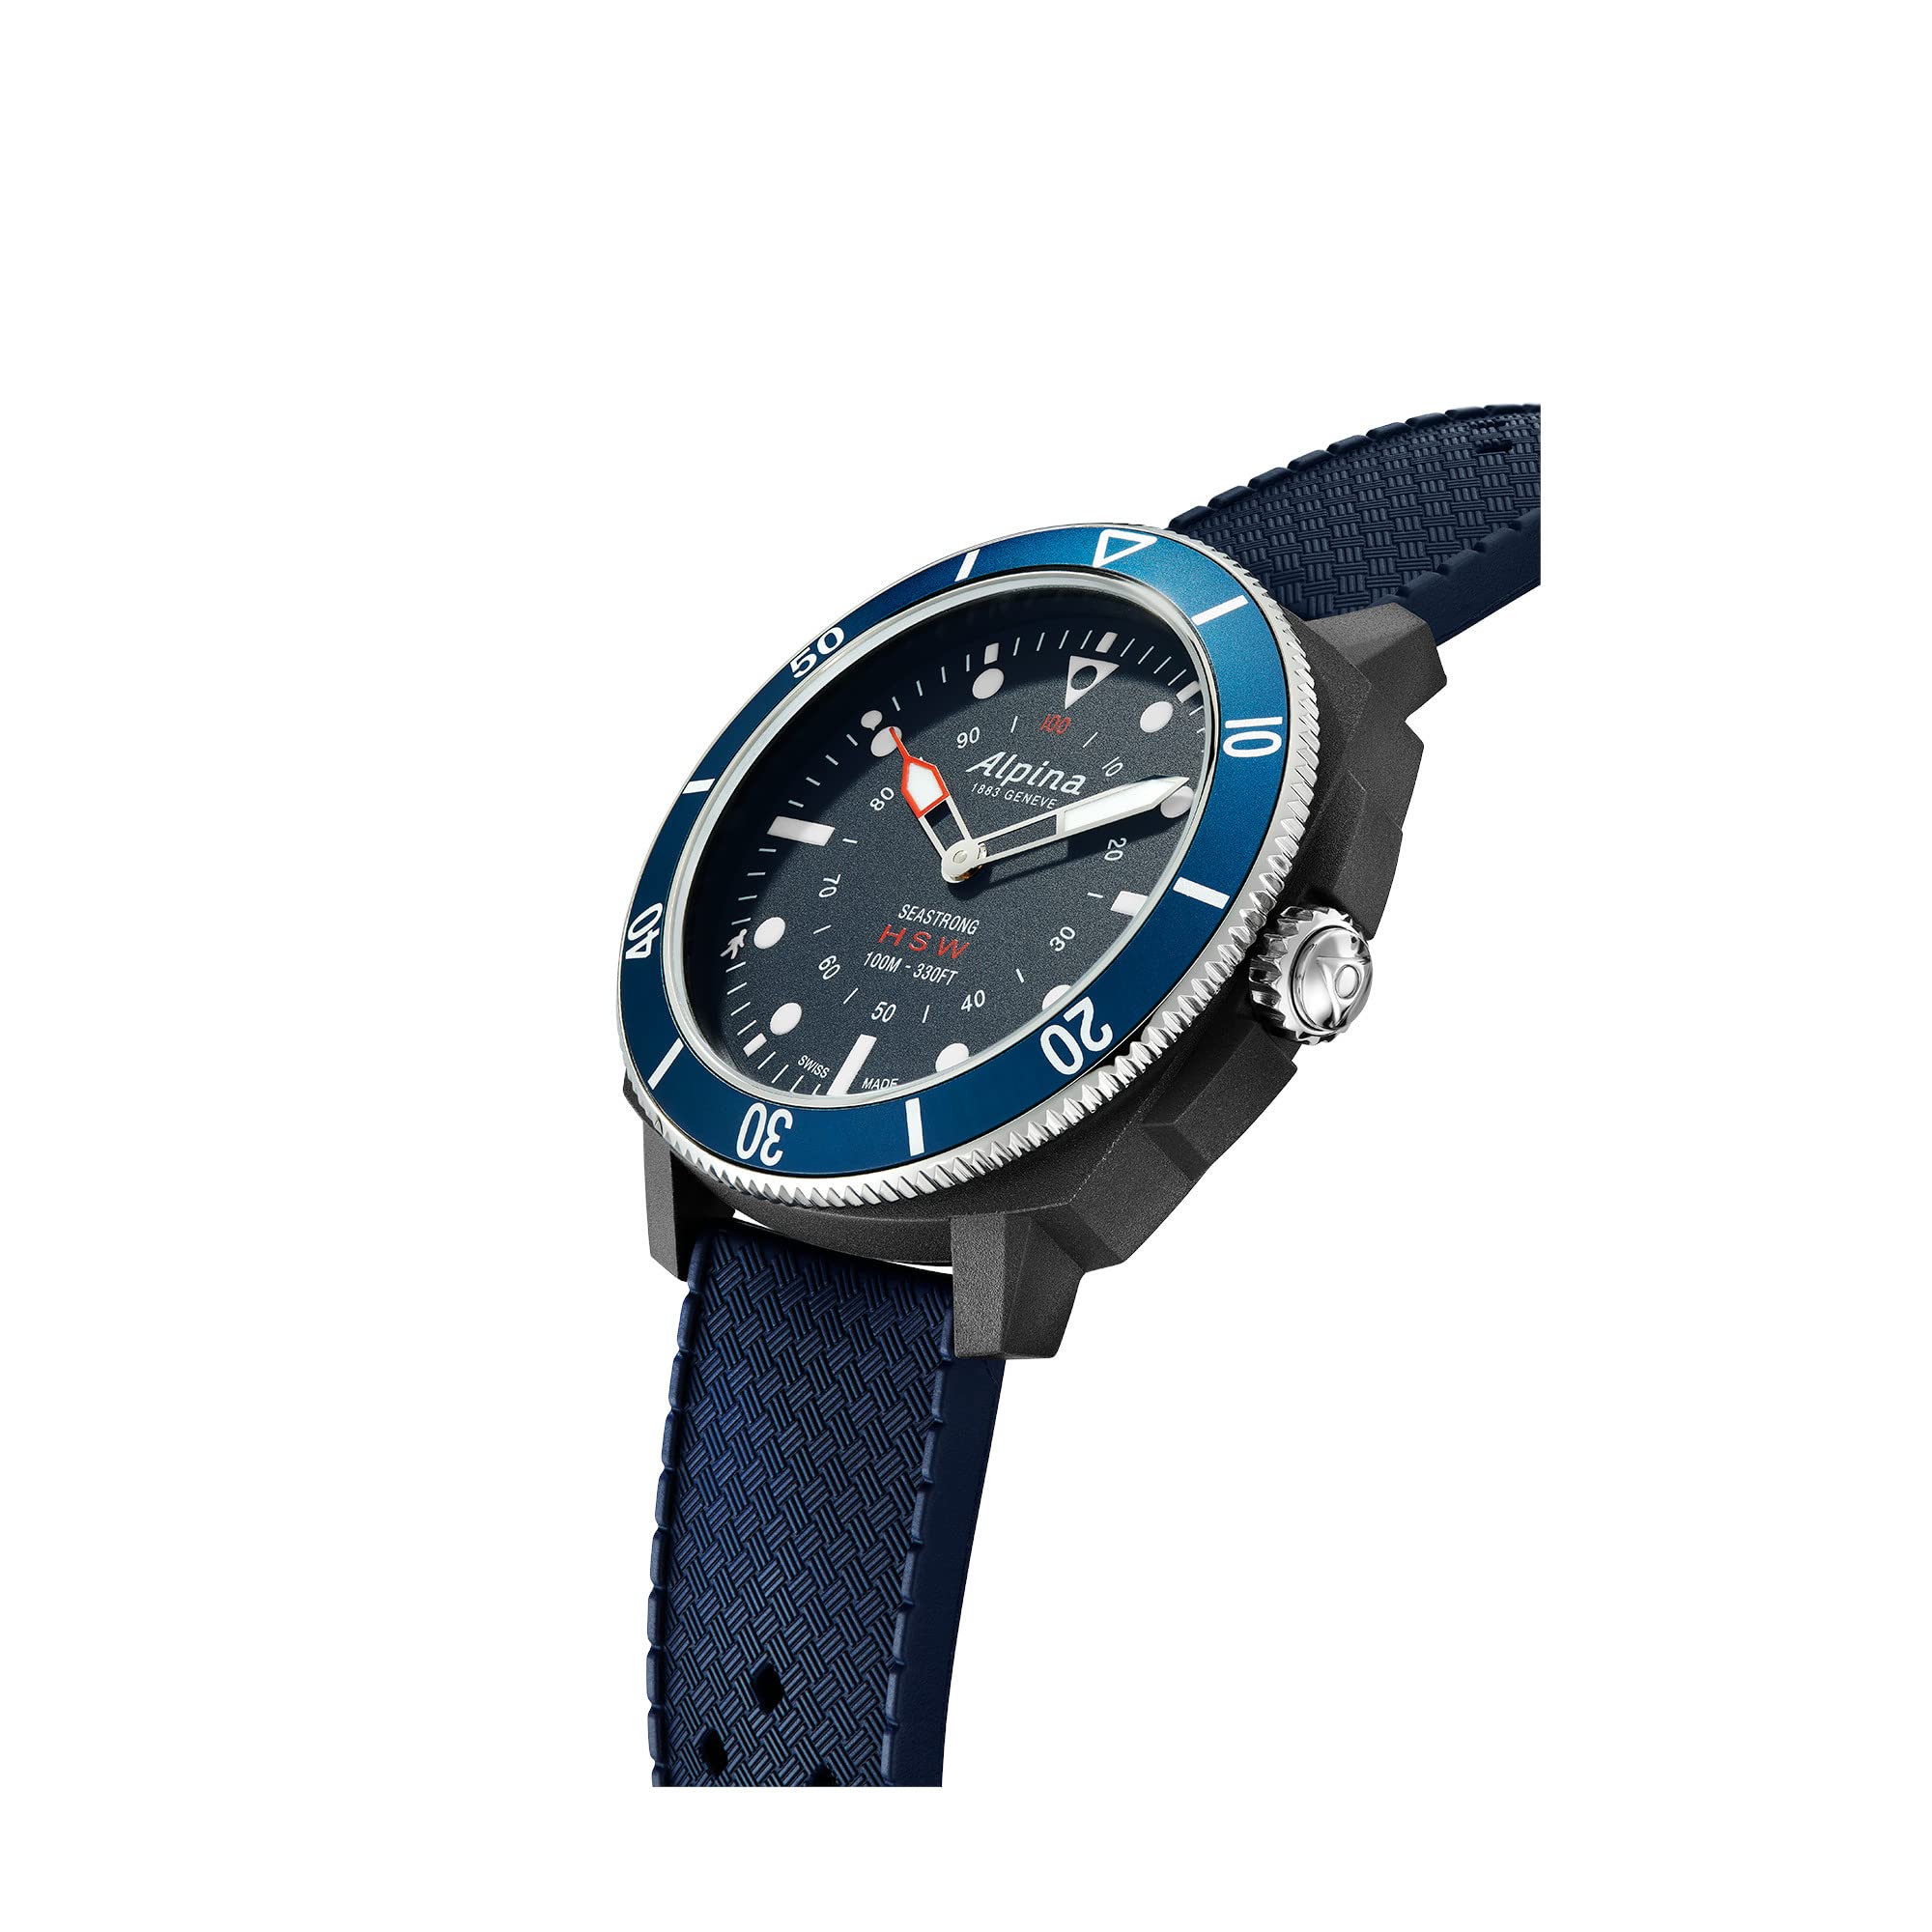 Alpina Men's AL-282LNN4V6 Horological Smart Watch Analog Display Quartz Blue Watch